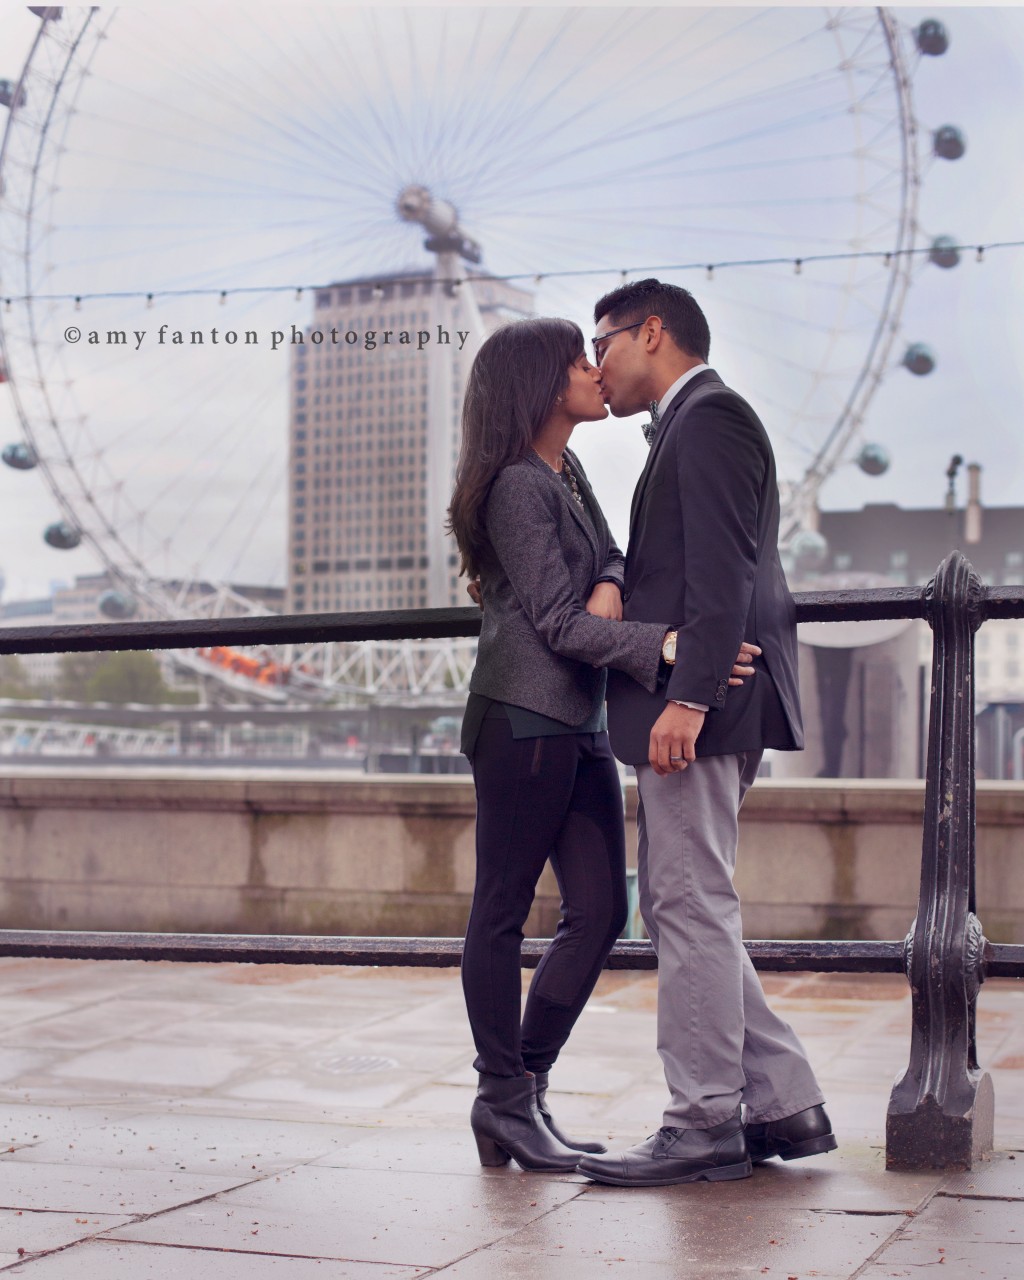 Romantic London Portraits